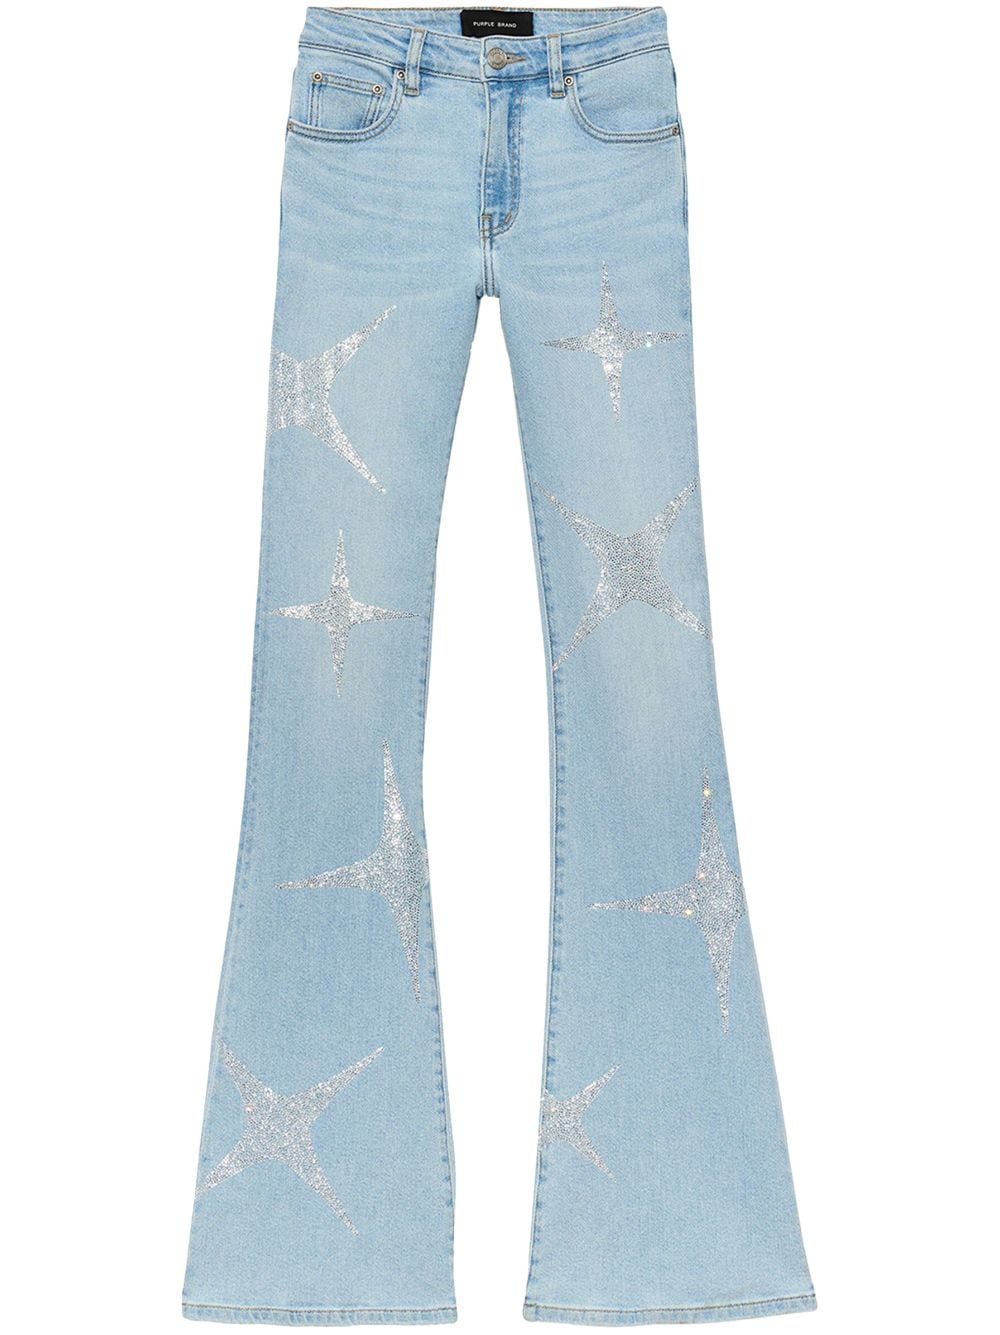 rhinestone-embellished bootcut jeans